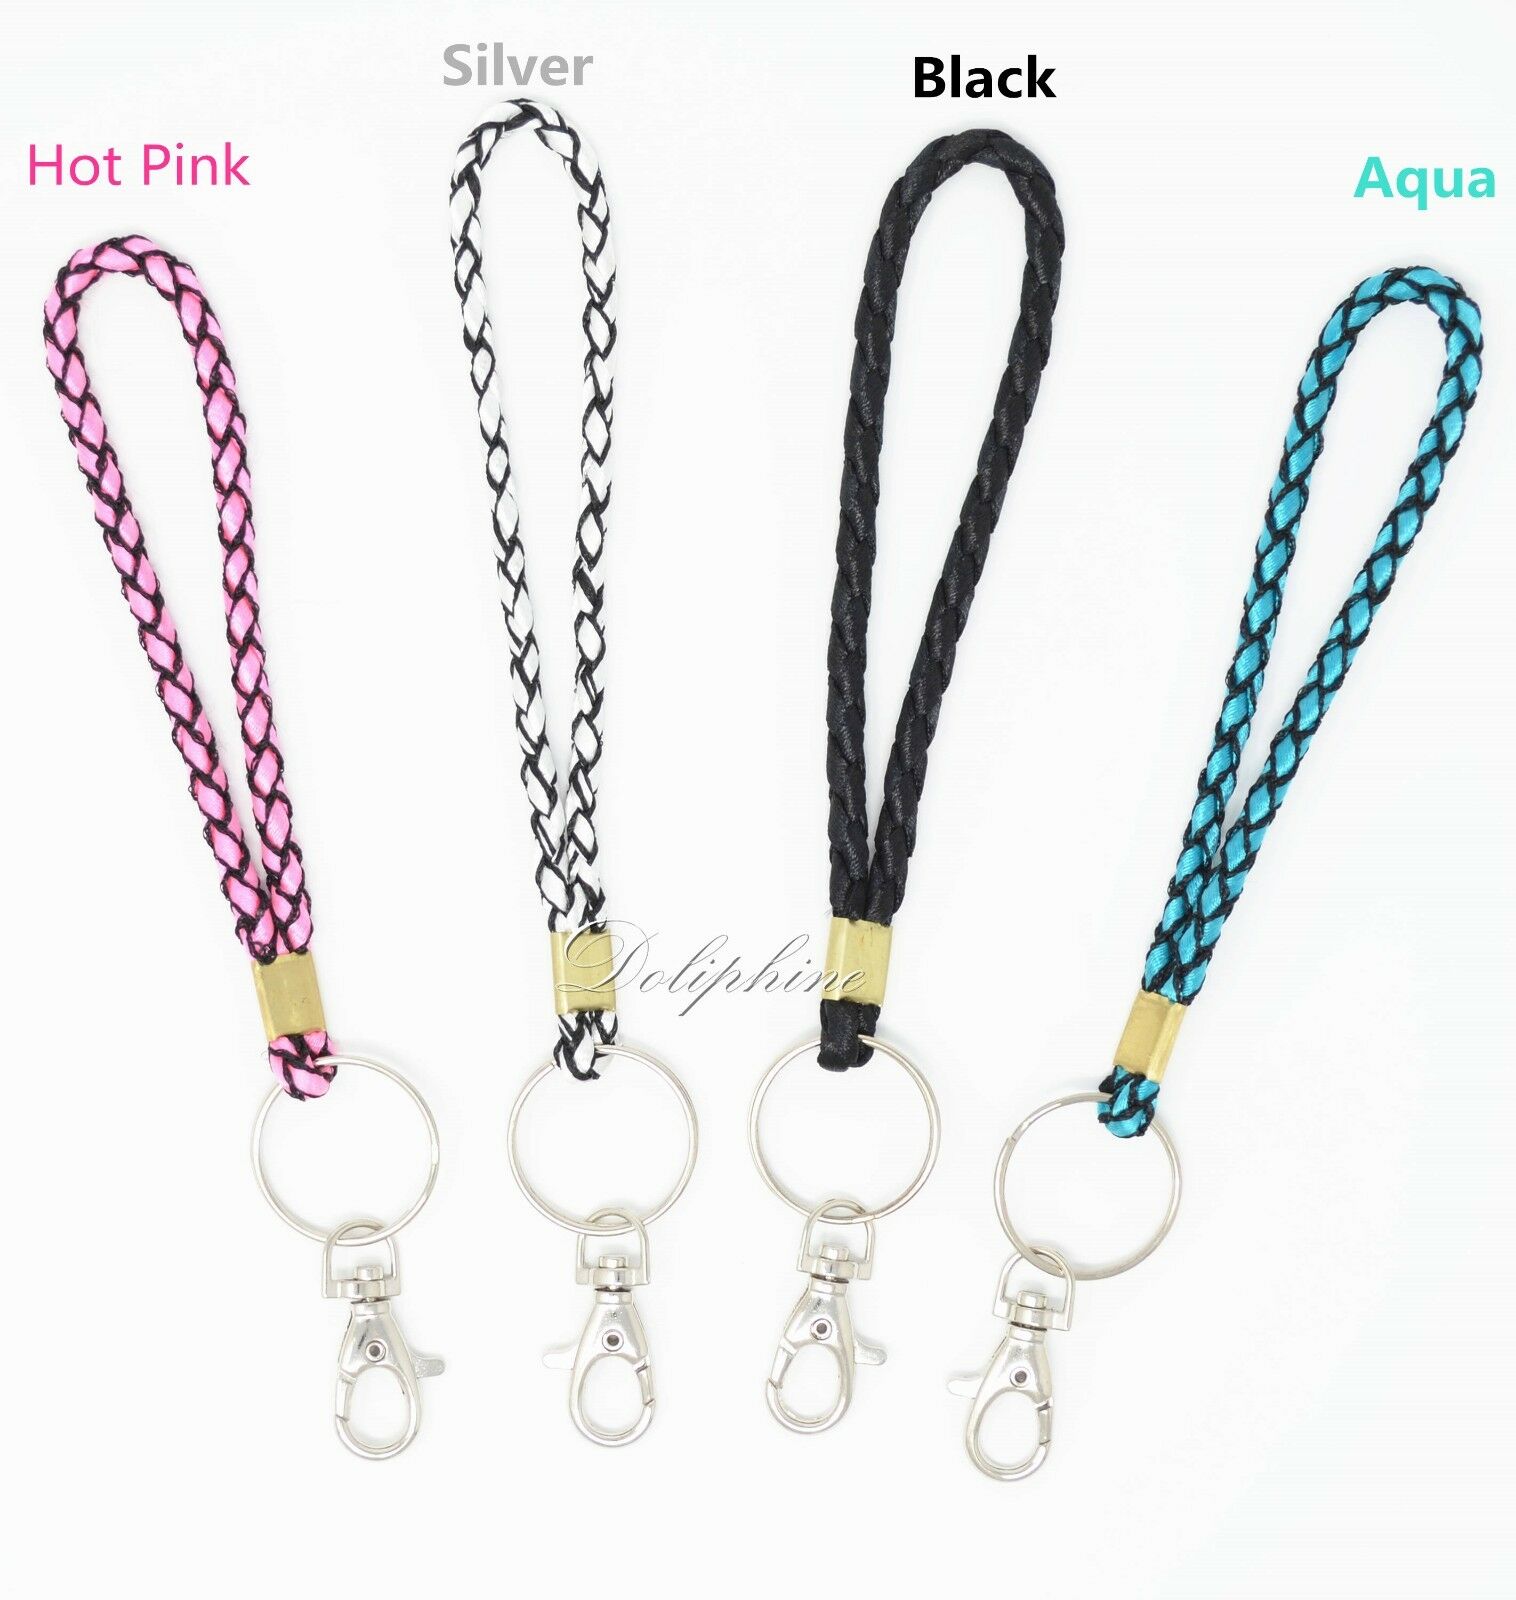 Top Braided Wristlet Key Fob Keychain For Key / Handbag / Wallet / Badge Holder